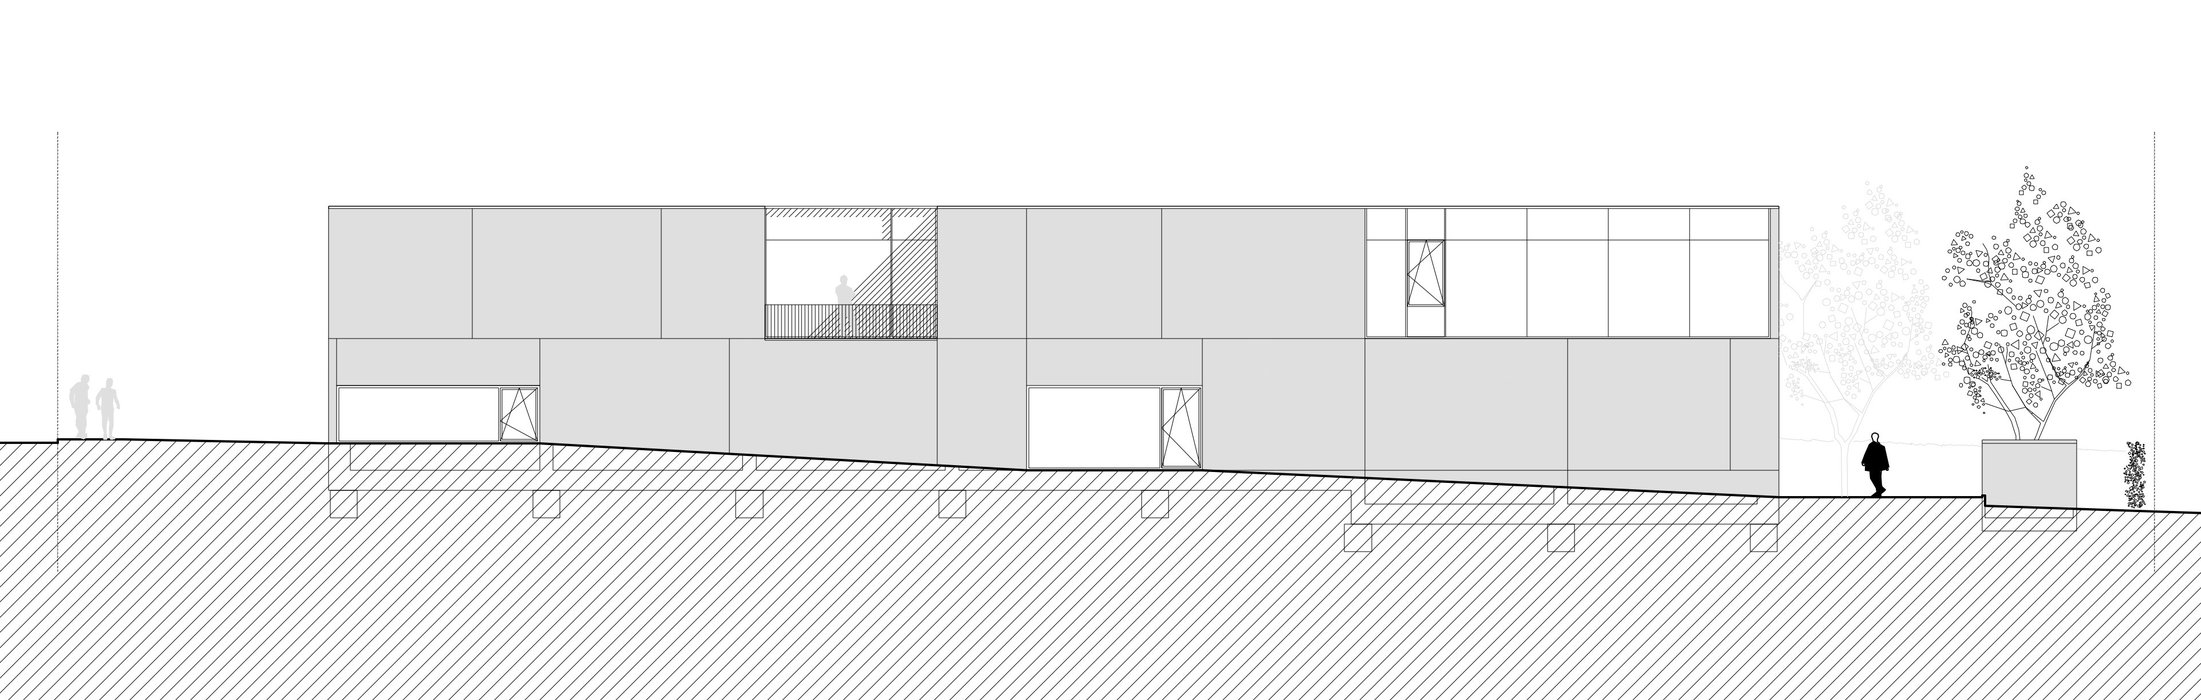 rg-architectes-prprint-nivelles-plans-elevation-1